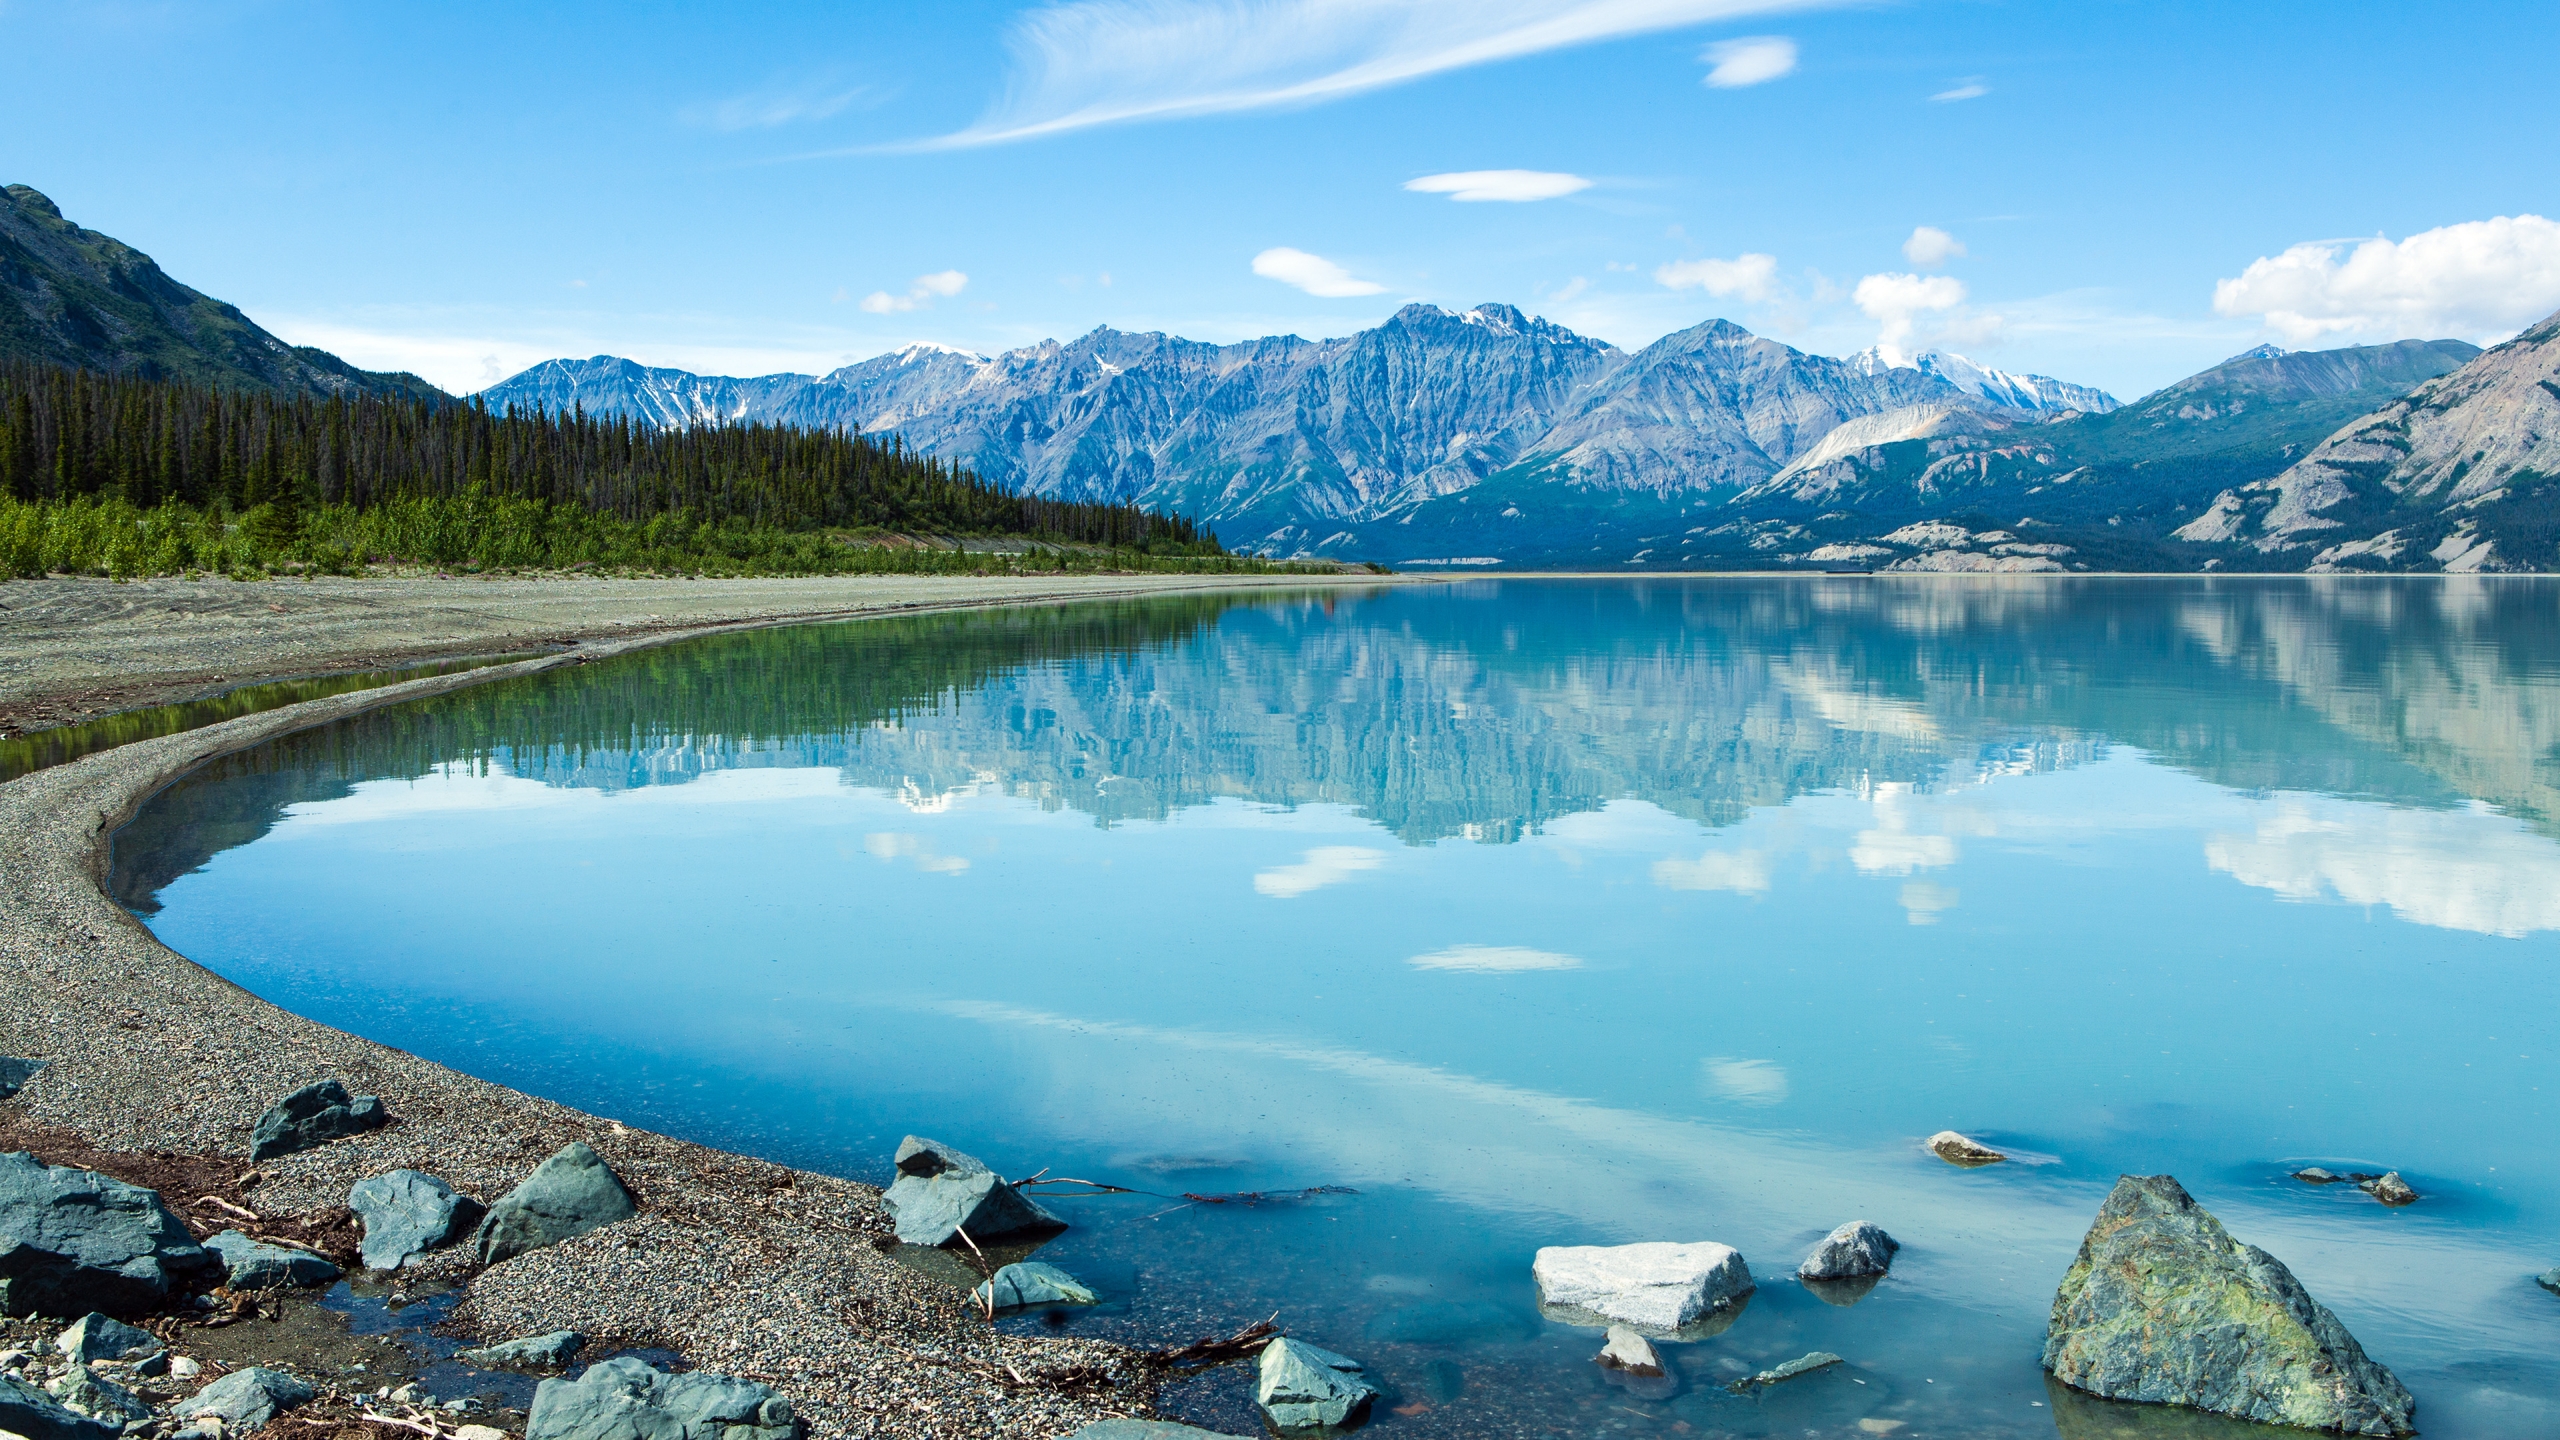 General 2560x1440 lake landscape nature Yukon Canada water mountains reflection